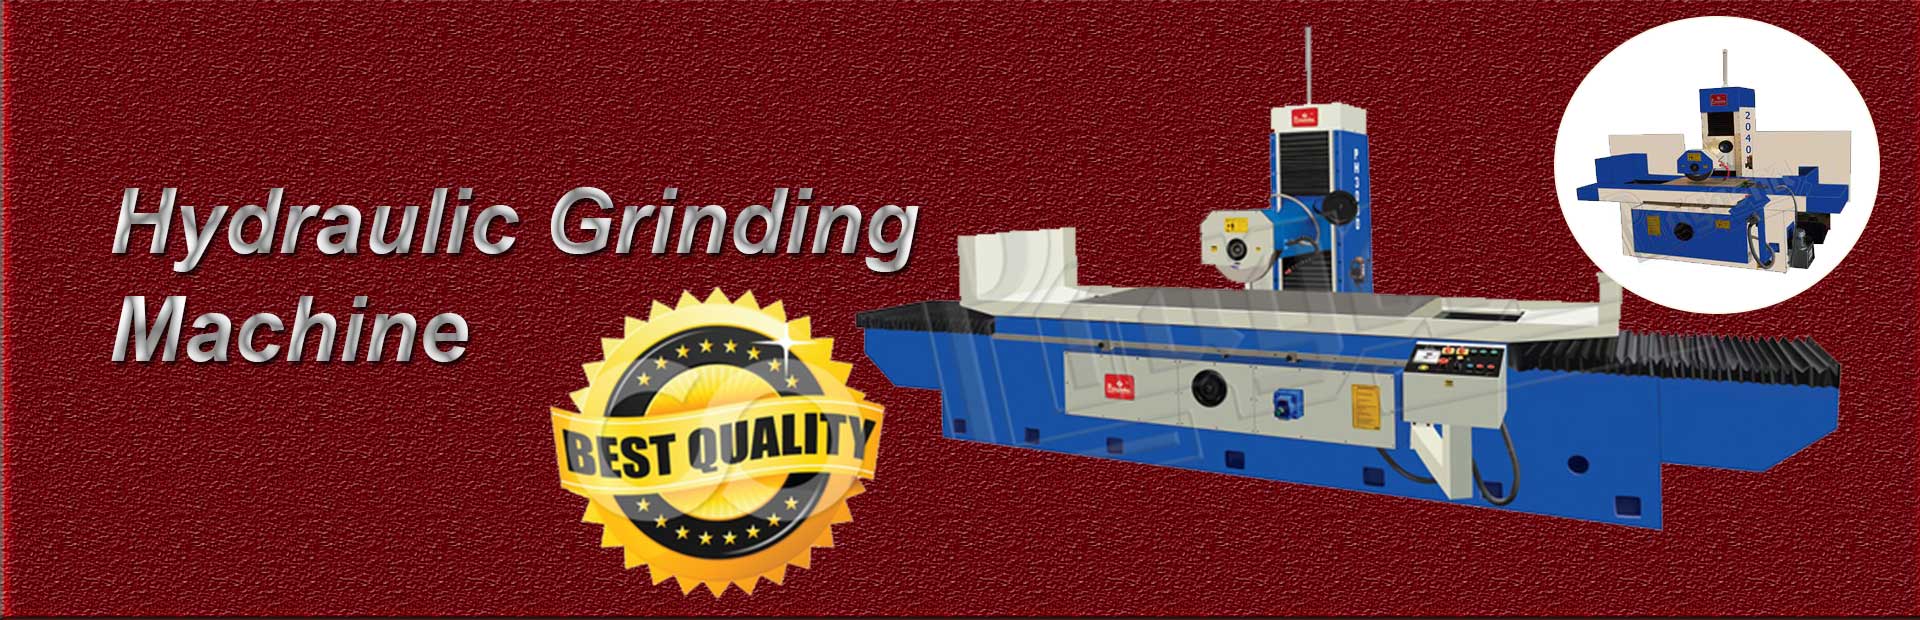 hydraulic-grinding machine manufacturer